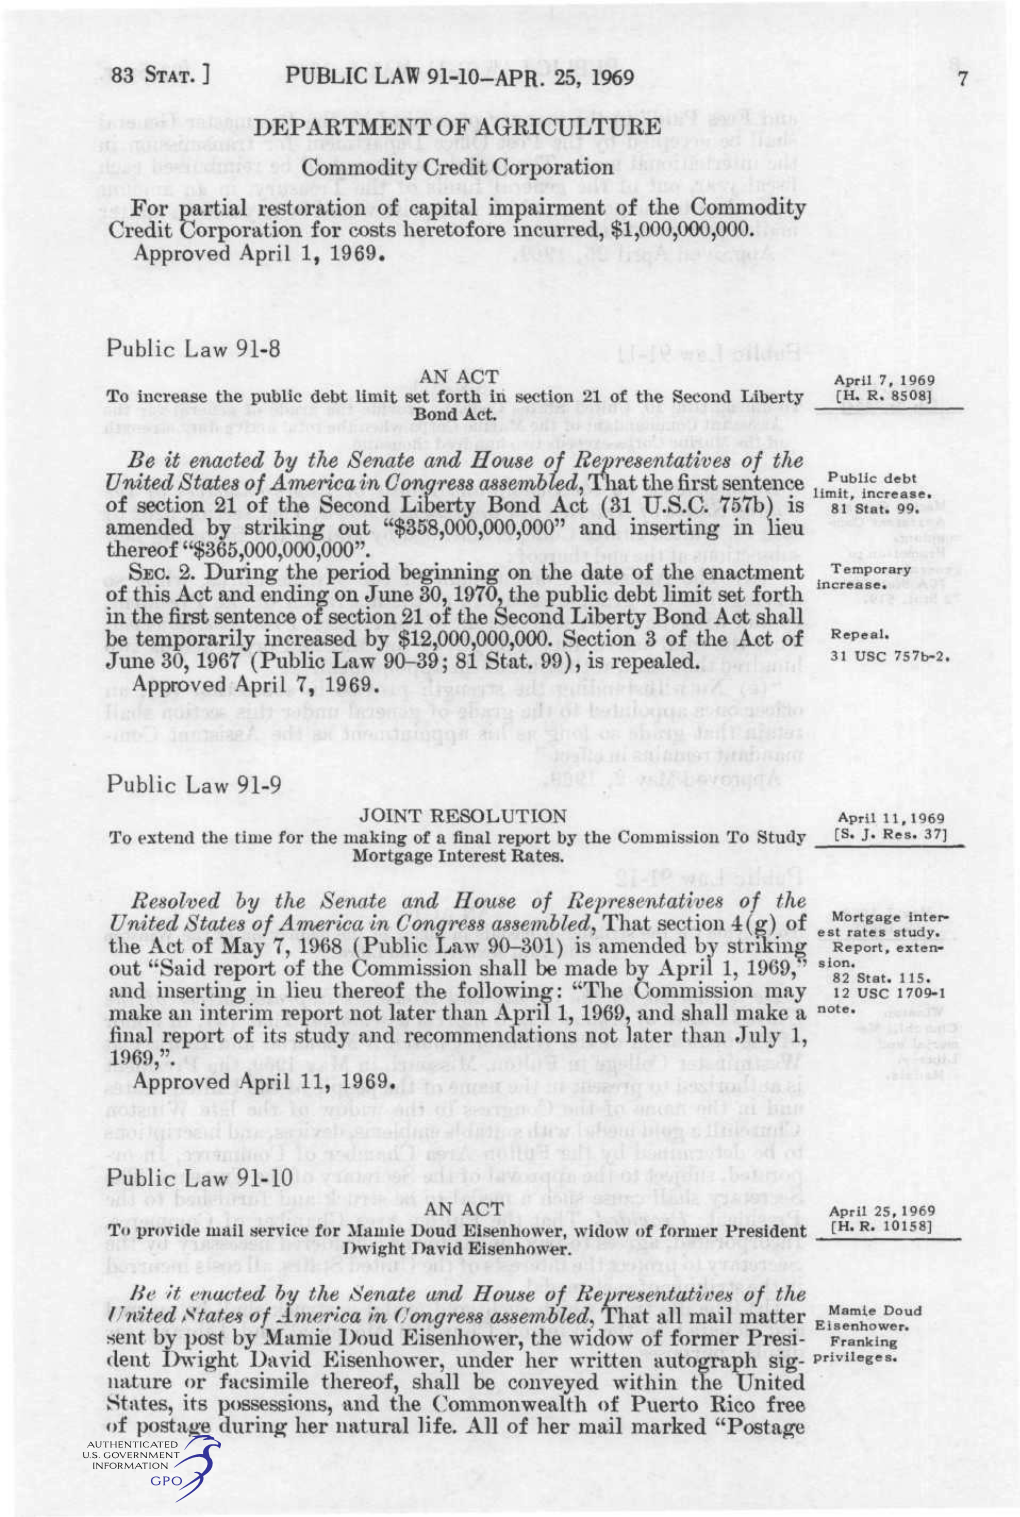 83 Stat. ] Public Law 91-10-Apr. 25, 1969 Department Of